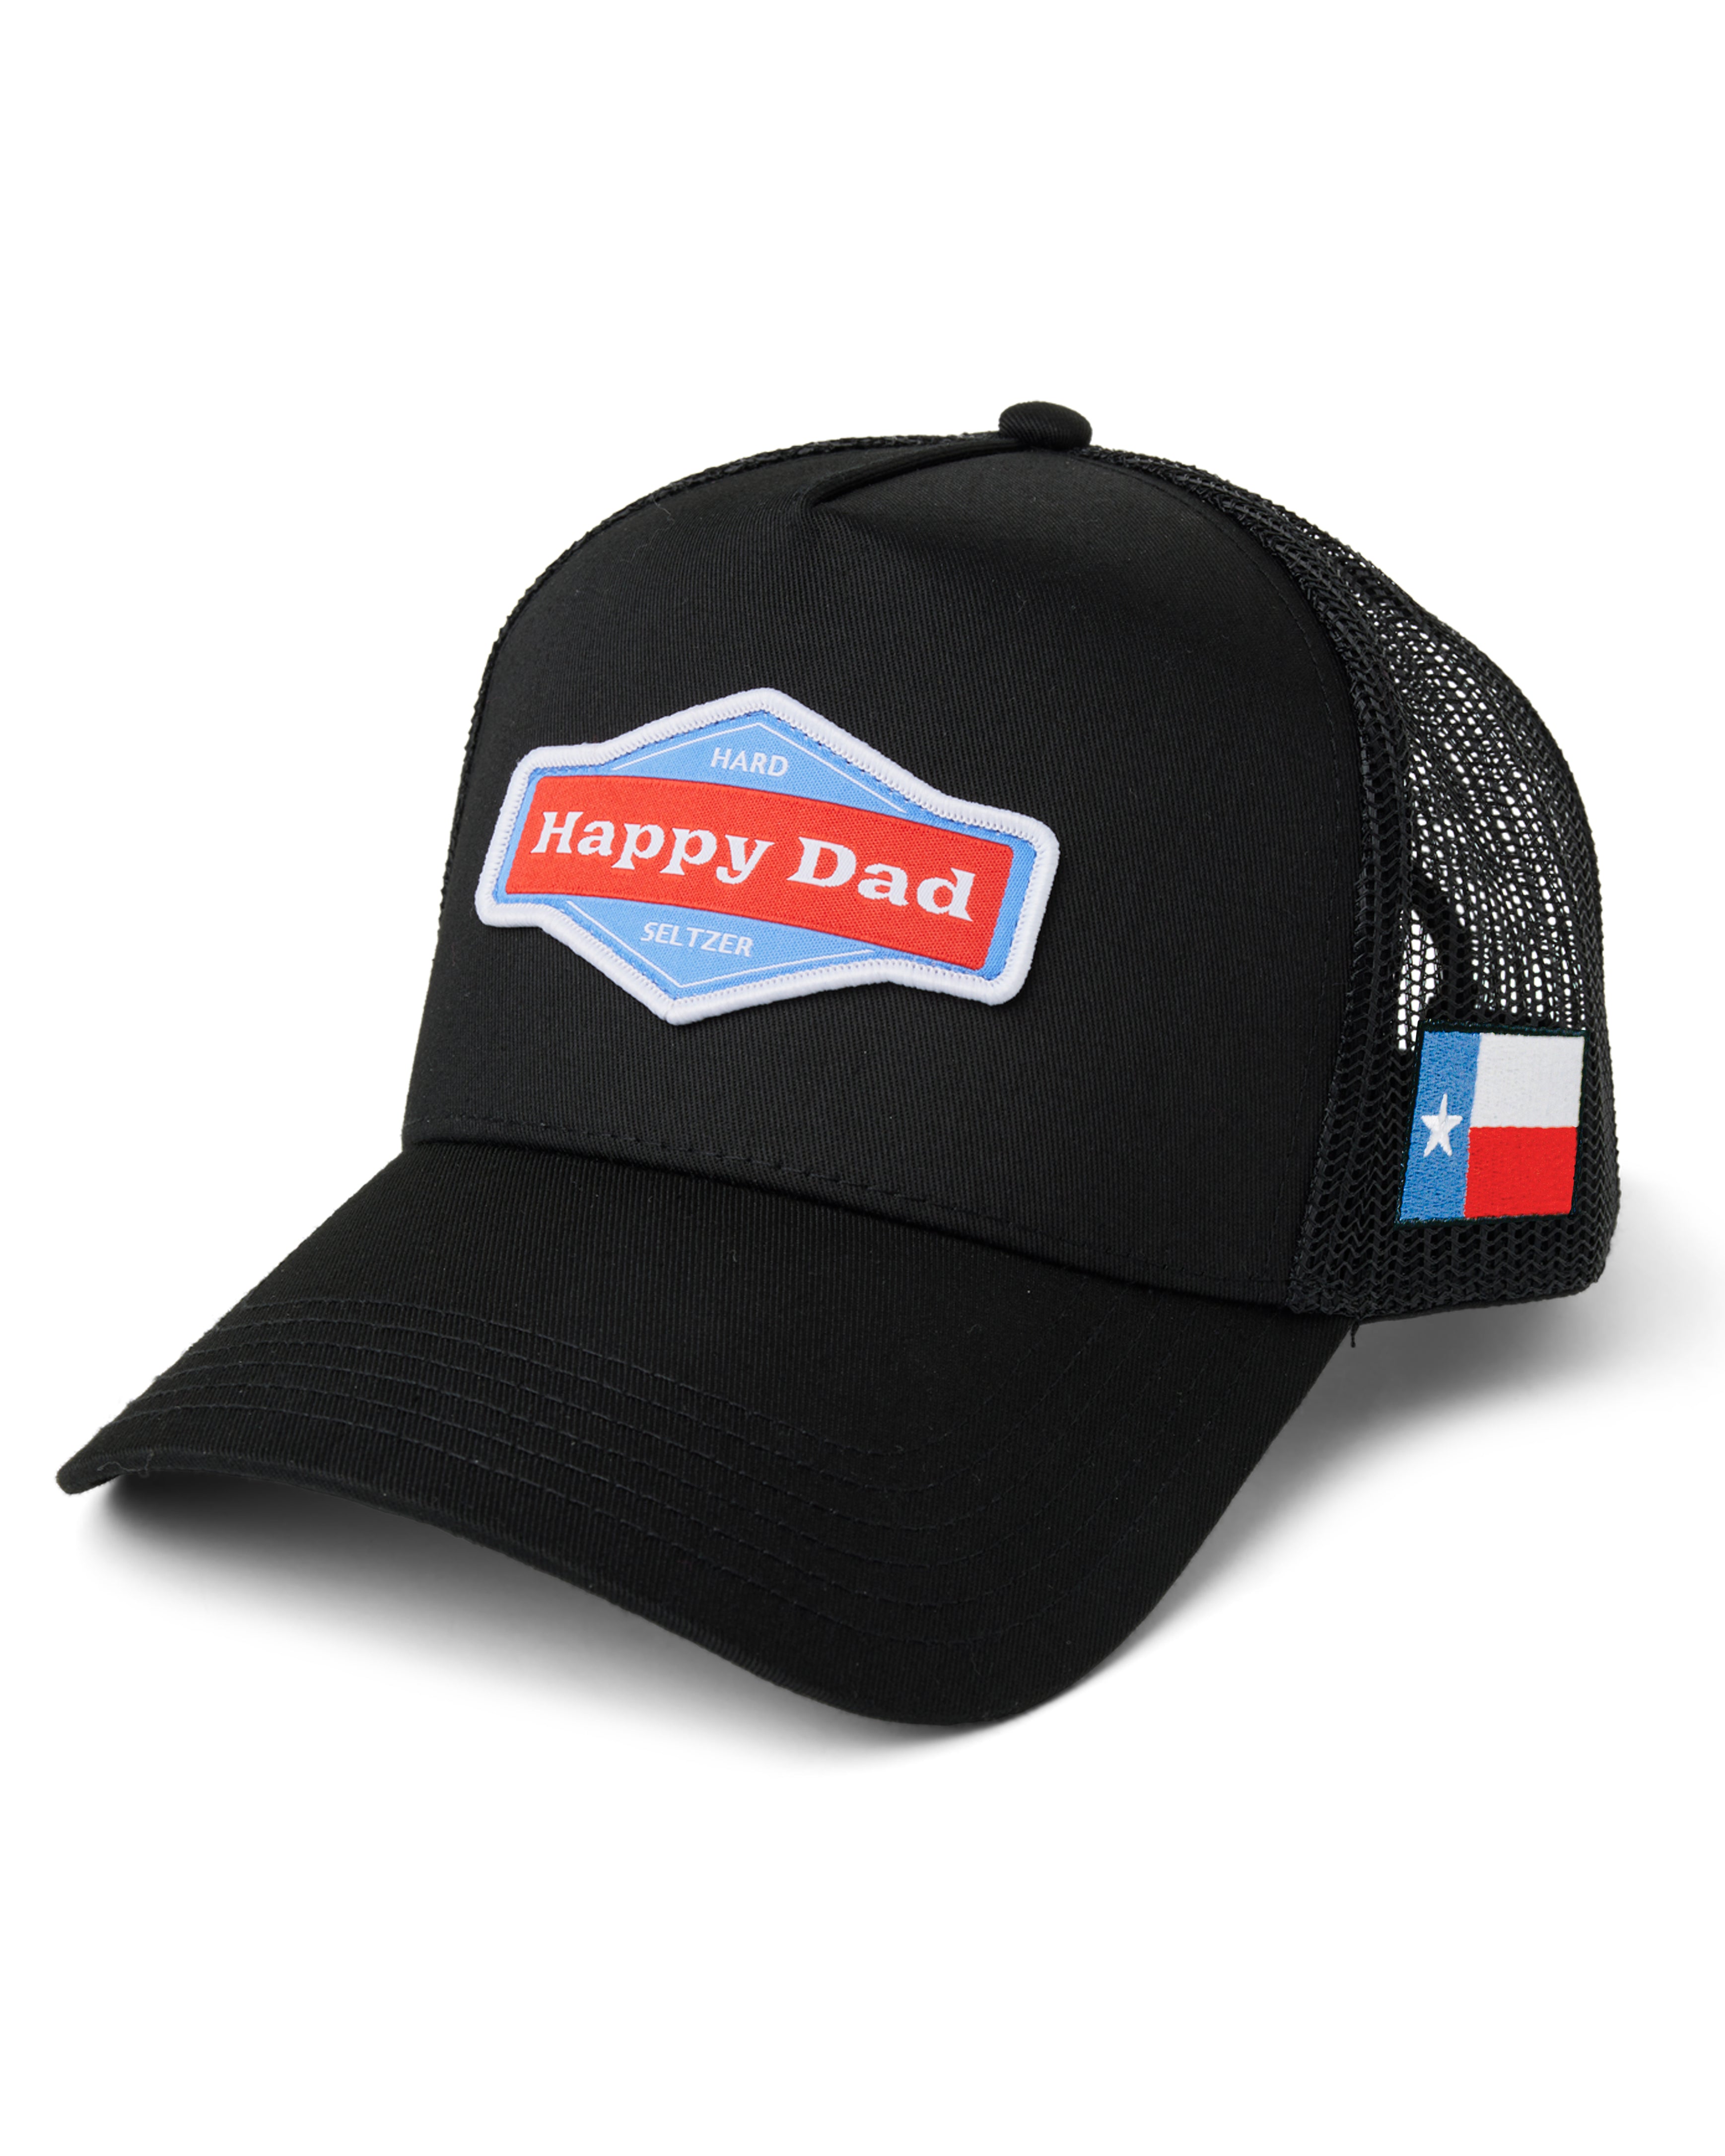 Happy Dad Trucker Hat (Black)